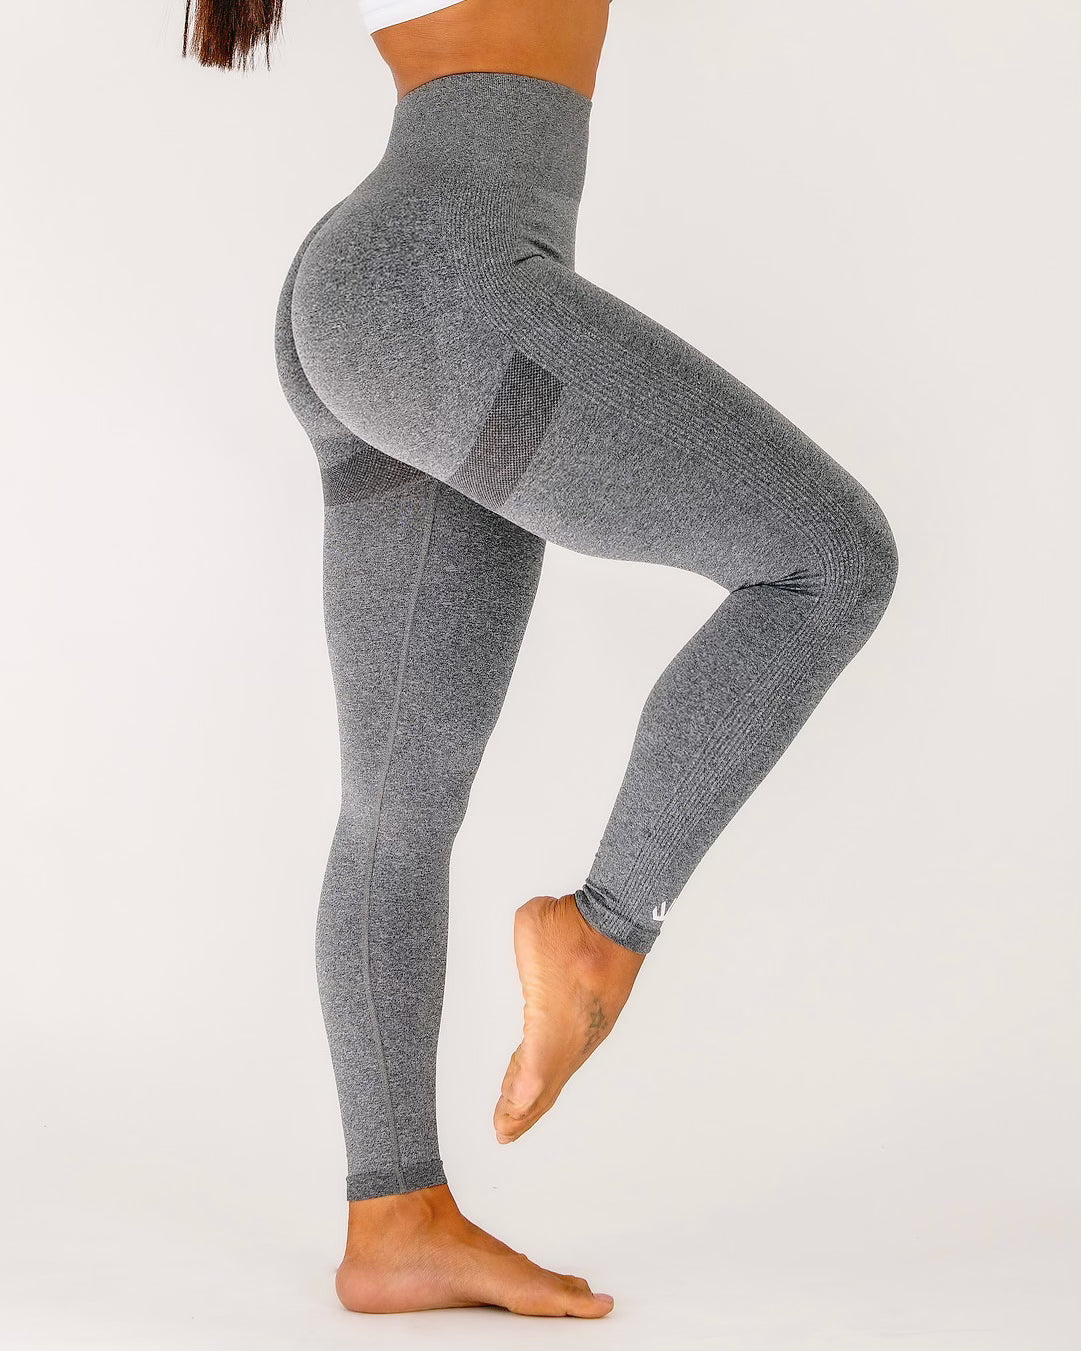 STUNNY Workout Leggings for Women High Waist Tummy Control Scrunch